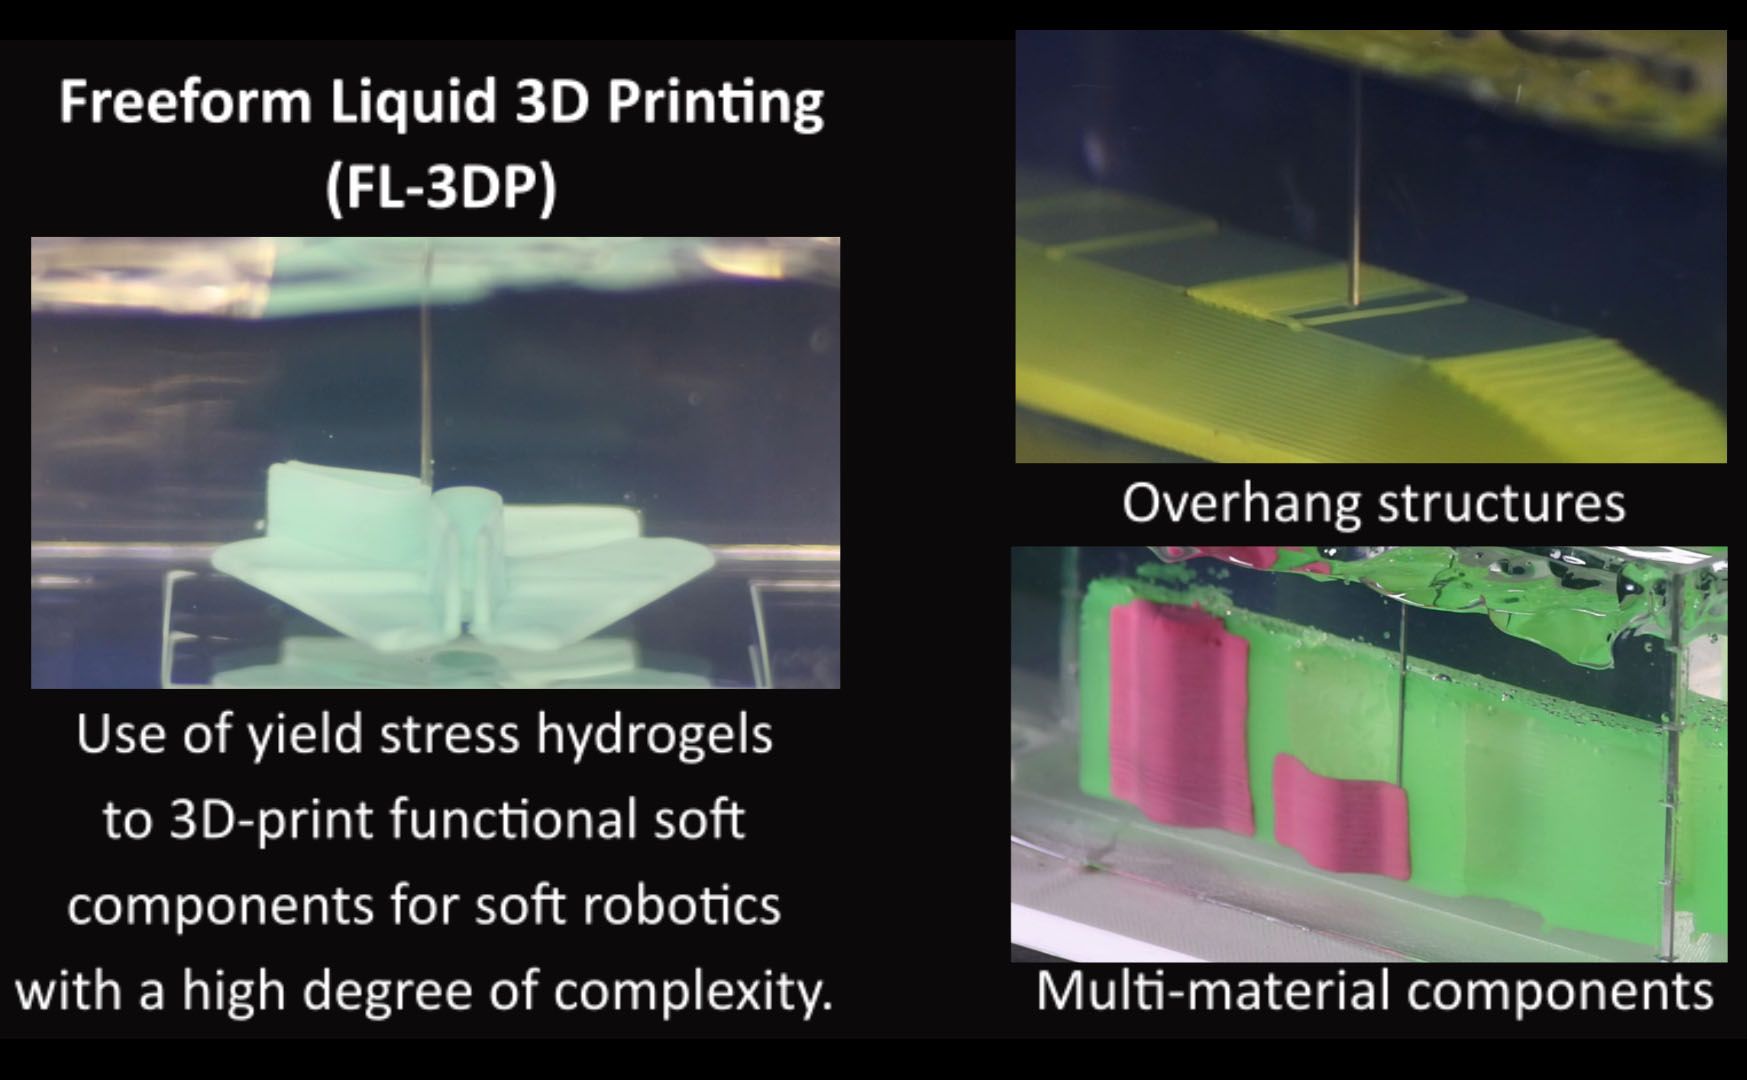 Impresión 3D fluida de forma libre